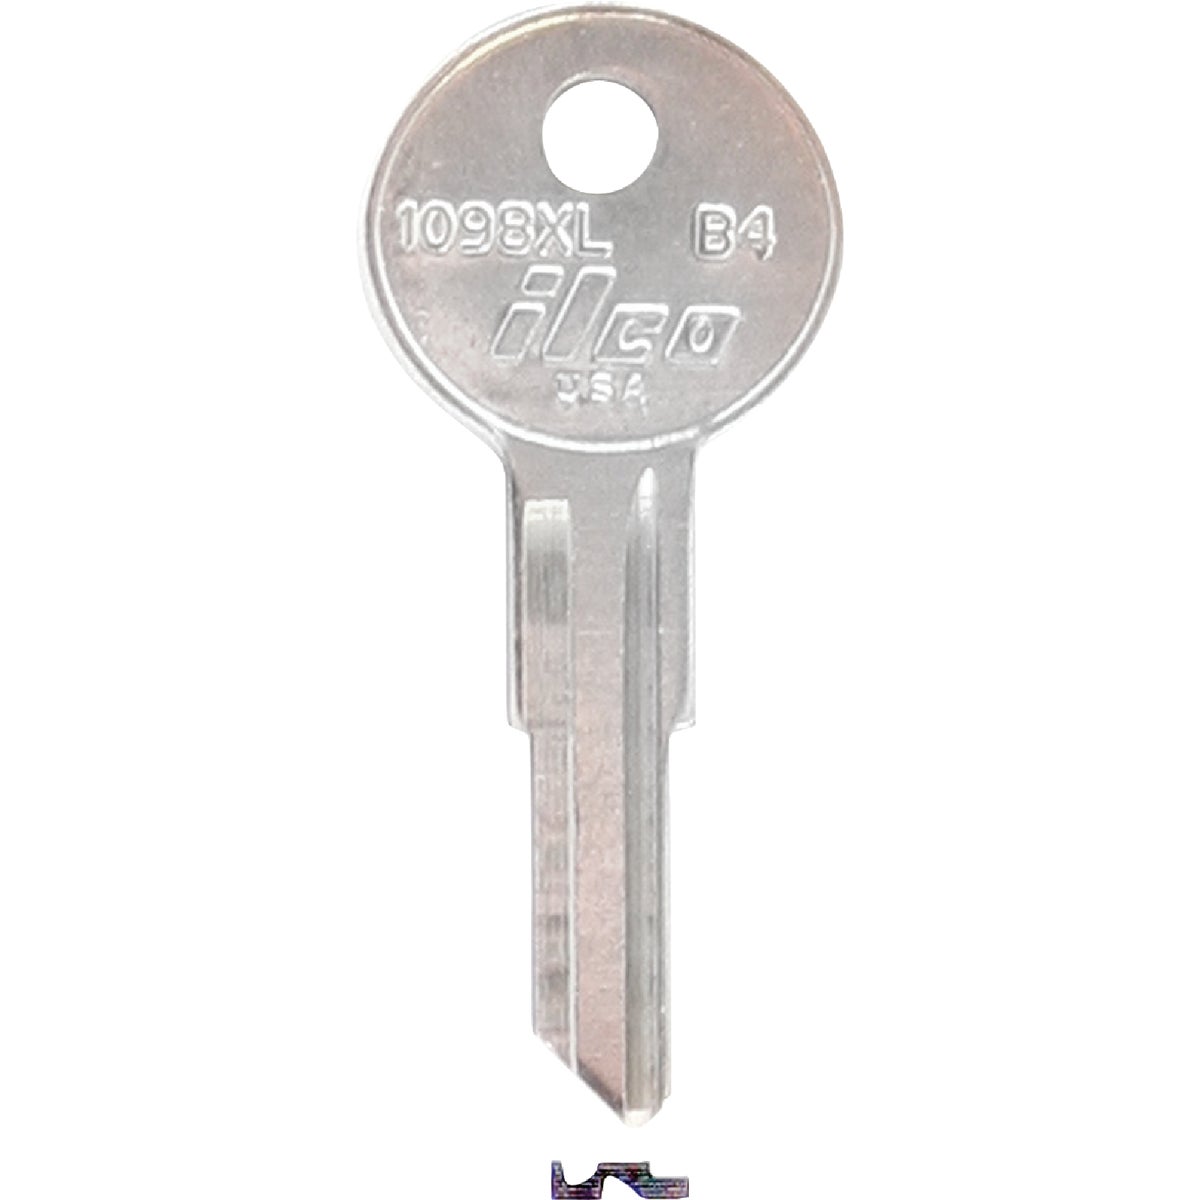 ILCO Briggs Nickel Plated Lawn Mower Key, 1098XL (10-Pack)